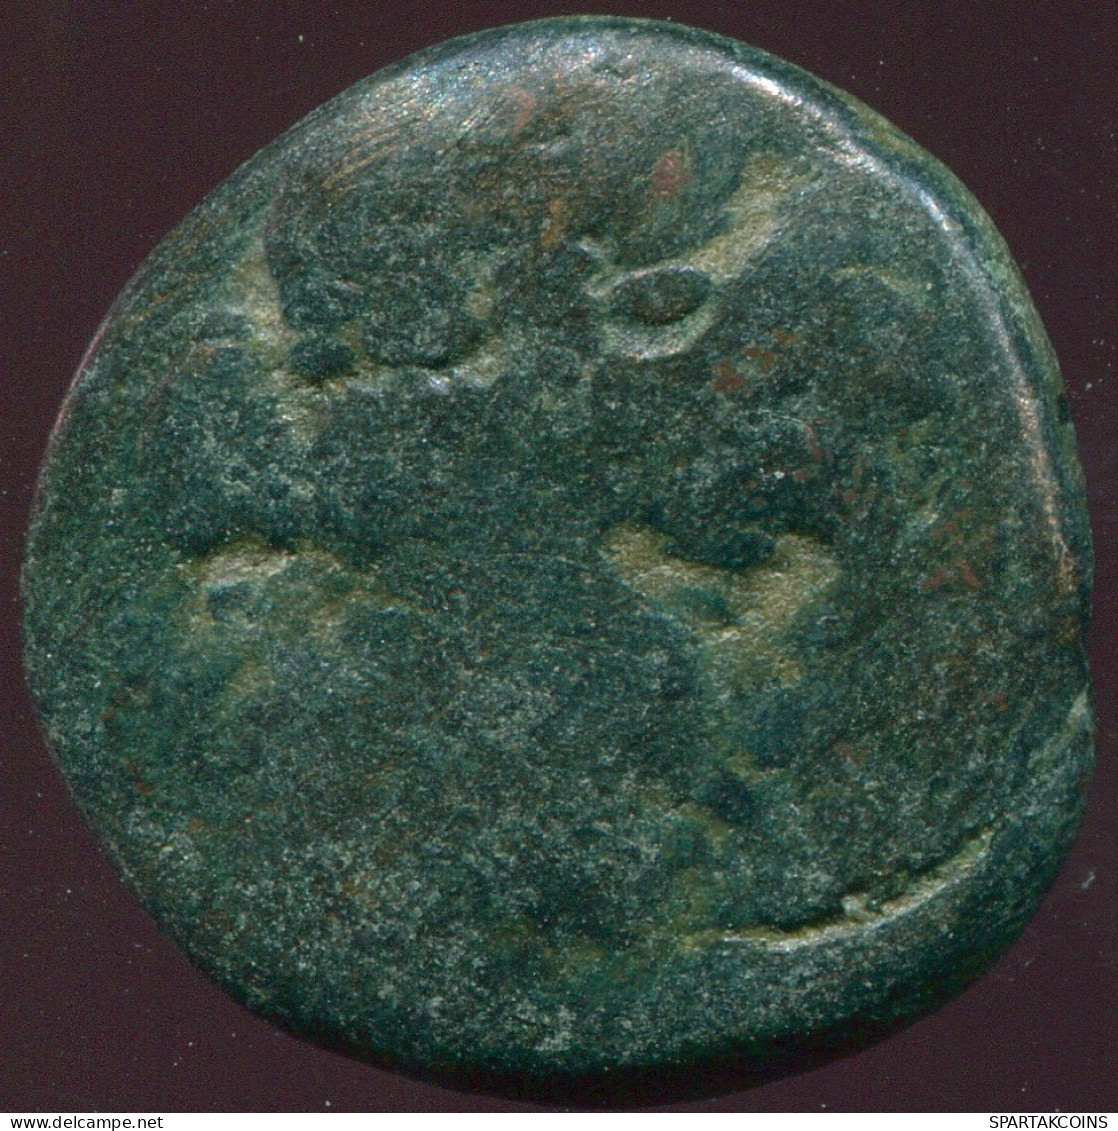 ARTEMIS Ancient Authentic GREEK Coin 6.47g/20.17mm #GRK1192.7.U.A - Greek